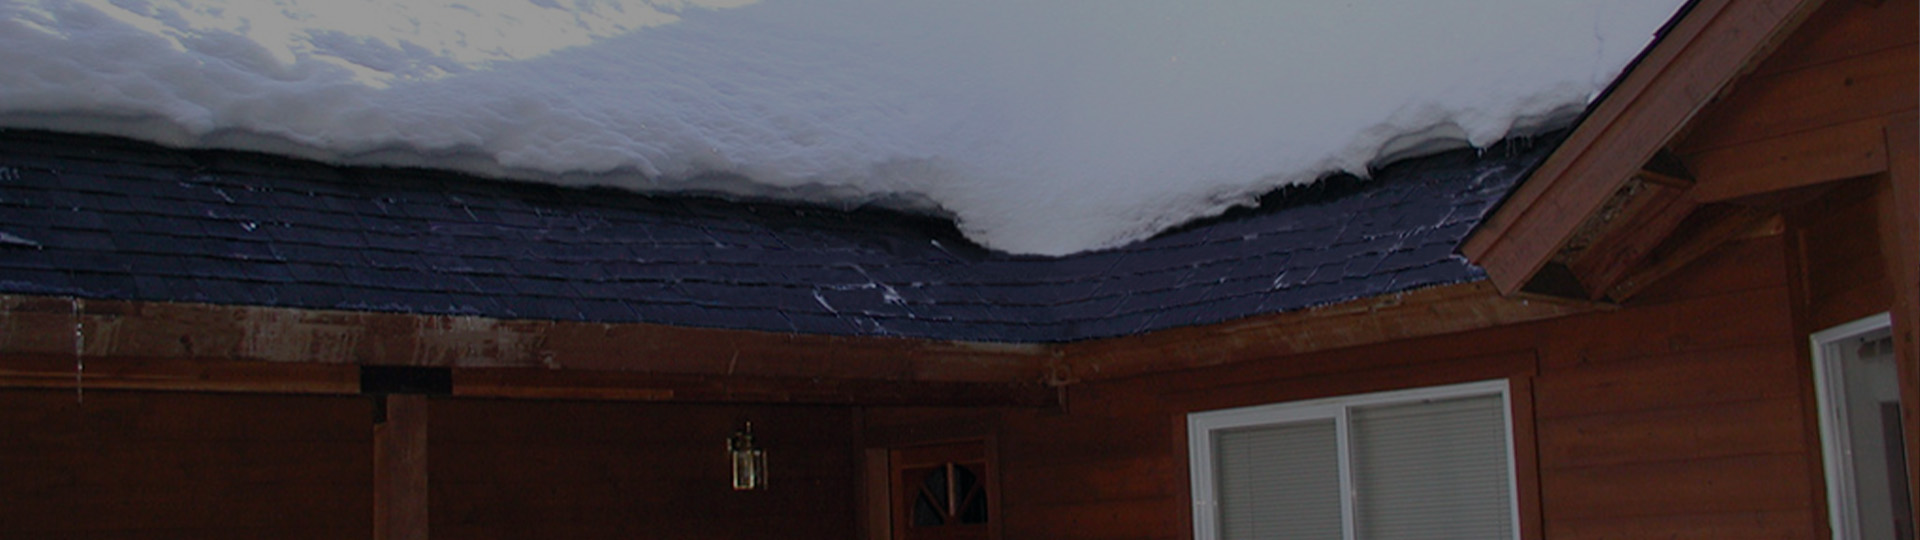 Radiant roof de-icing banner.